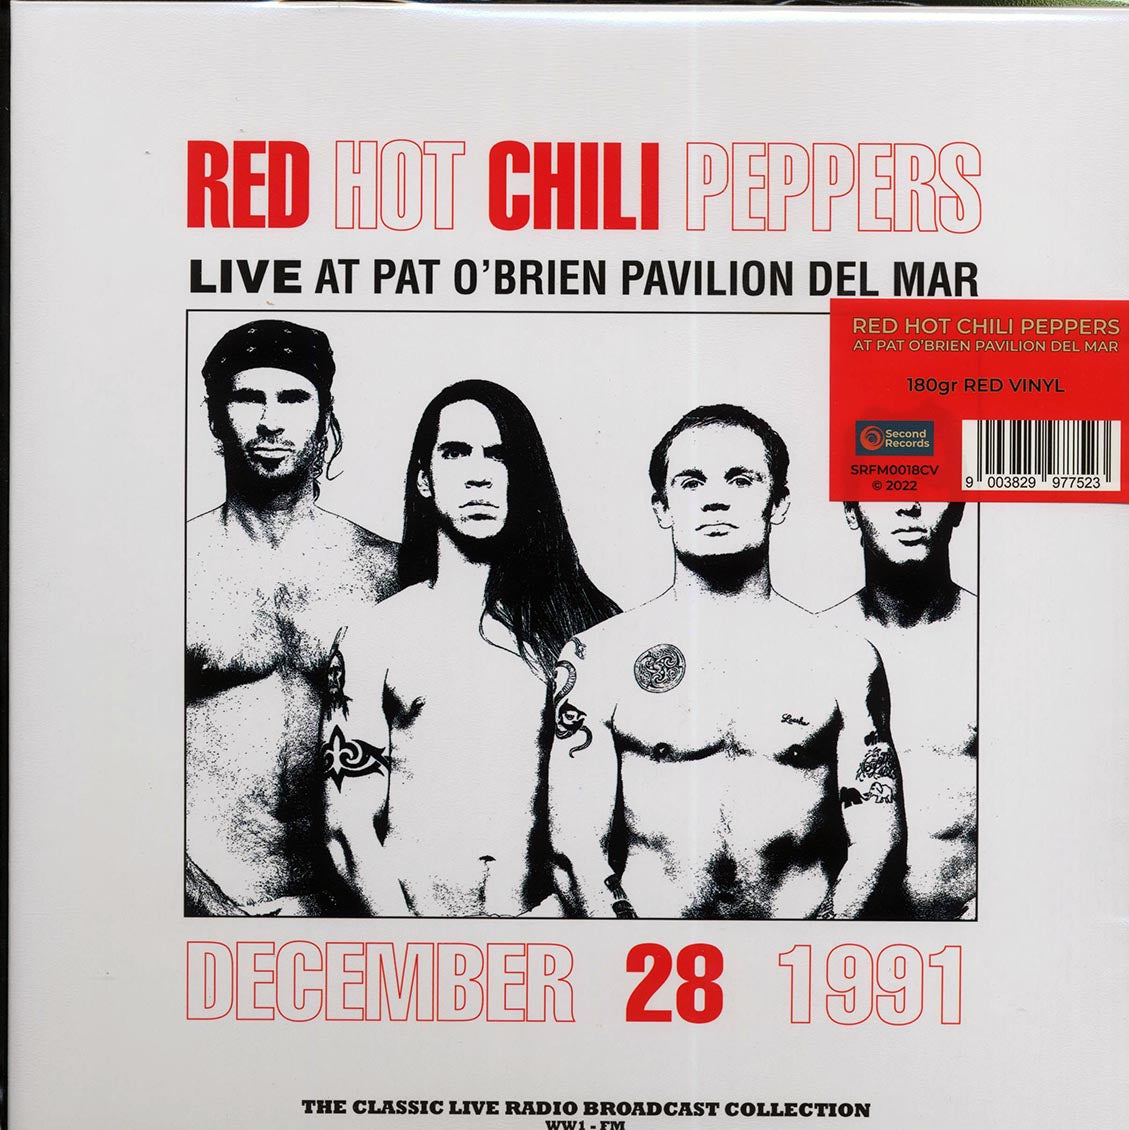 Red Hot Chili Peppers - Live At Pat O'Brien Pavilion Del Mar December 28 1991 (180g) (red vinyl) - Vinyl LP